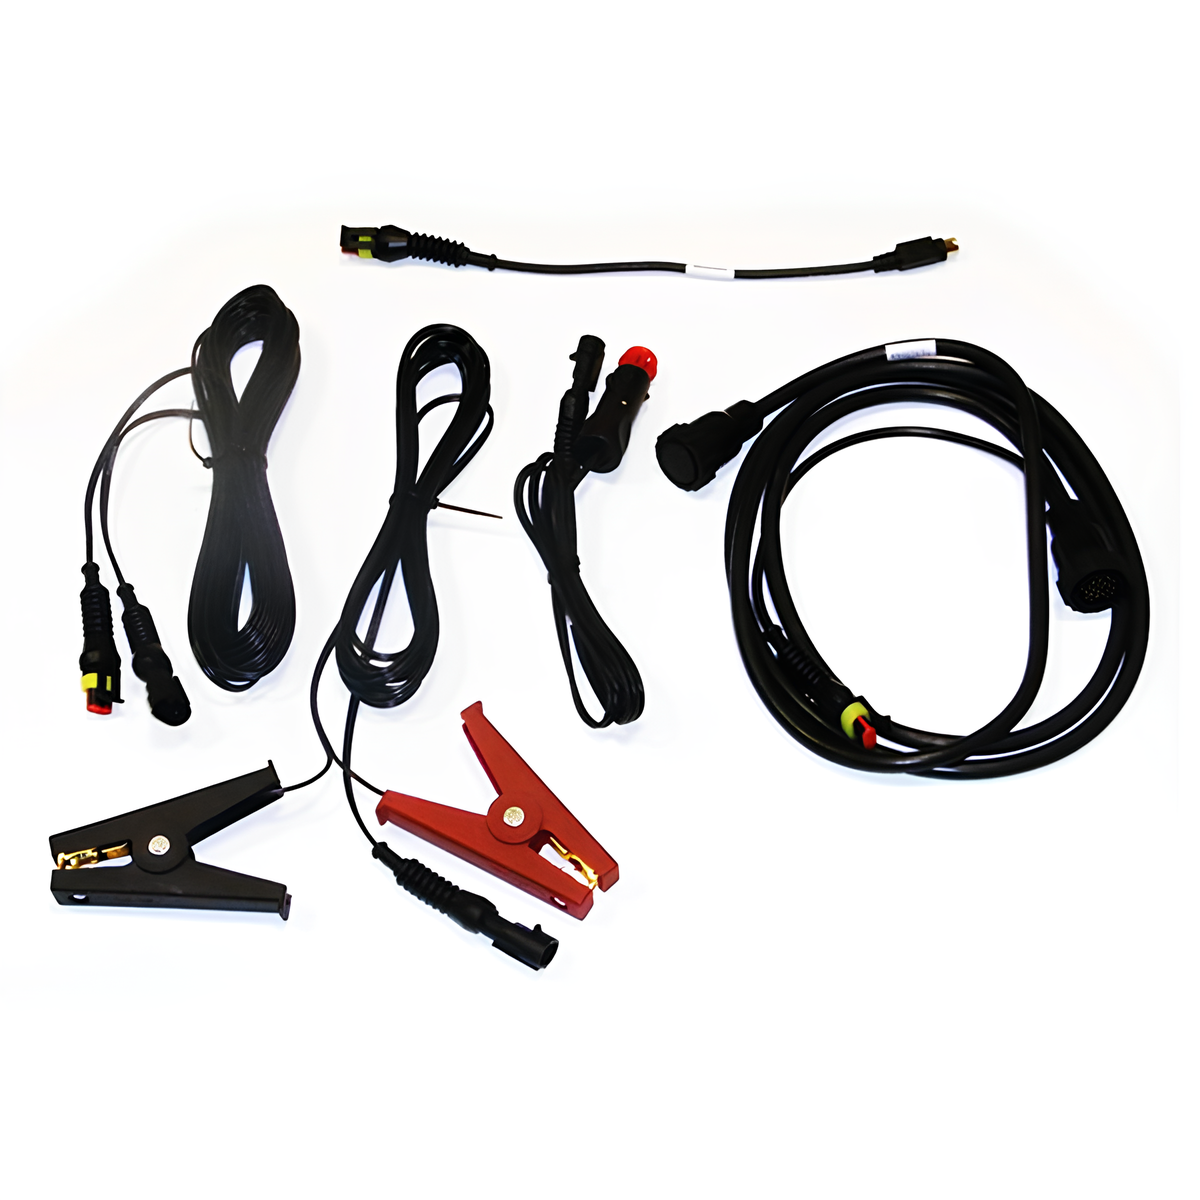 BIKE power supply (battery) and adapter kit for Navigator NANO S